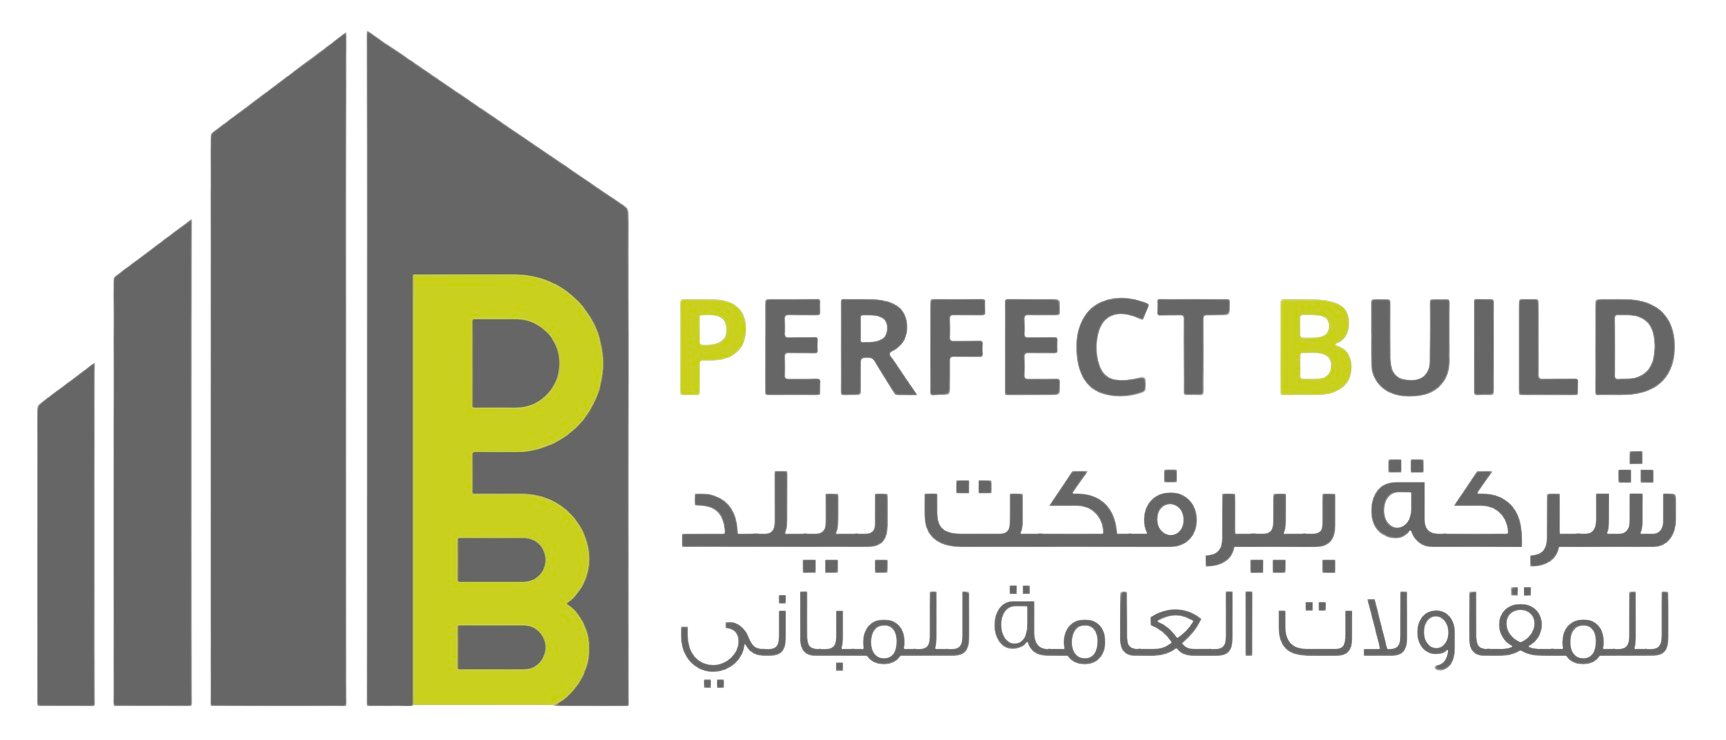 perfect build logo